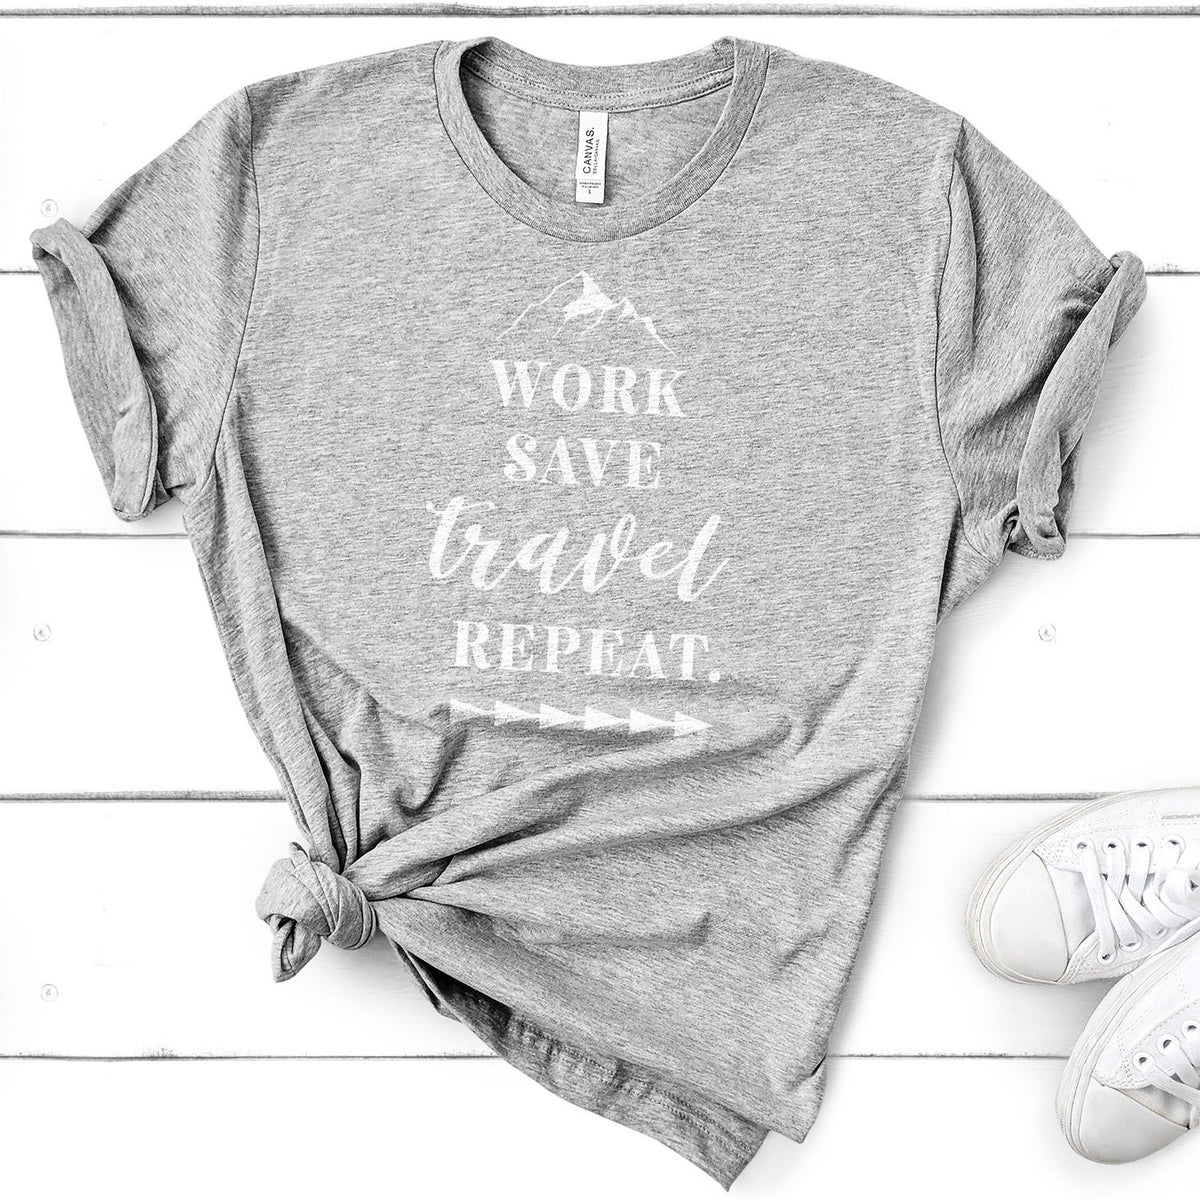 Work Save Travel Repeat - Short Sleeve Tee Shirt